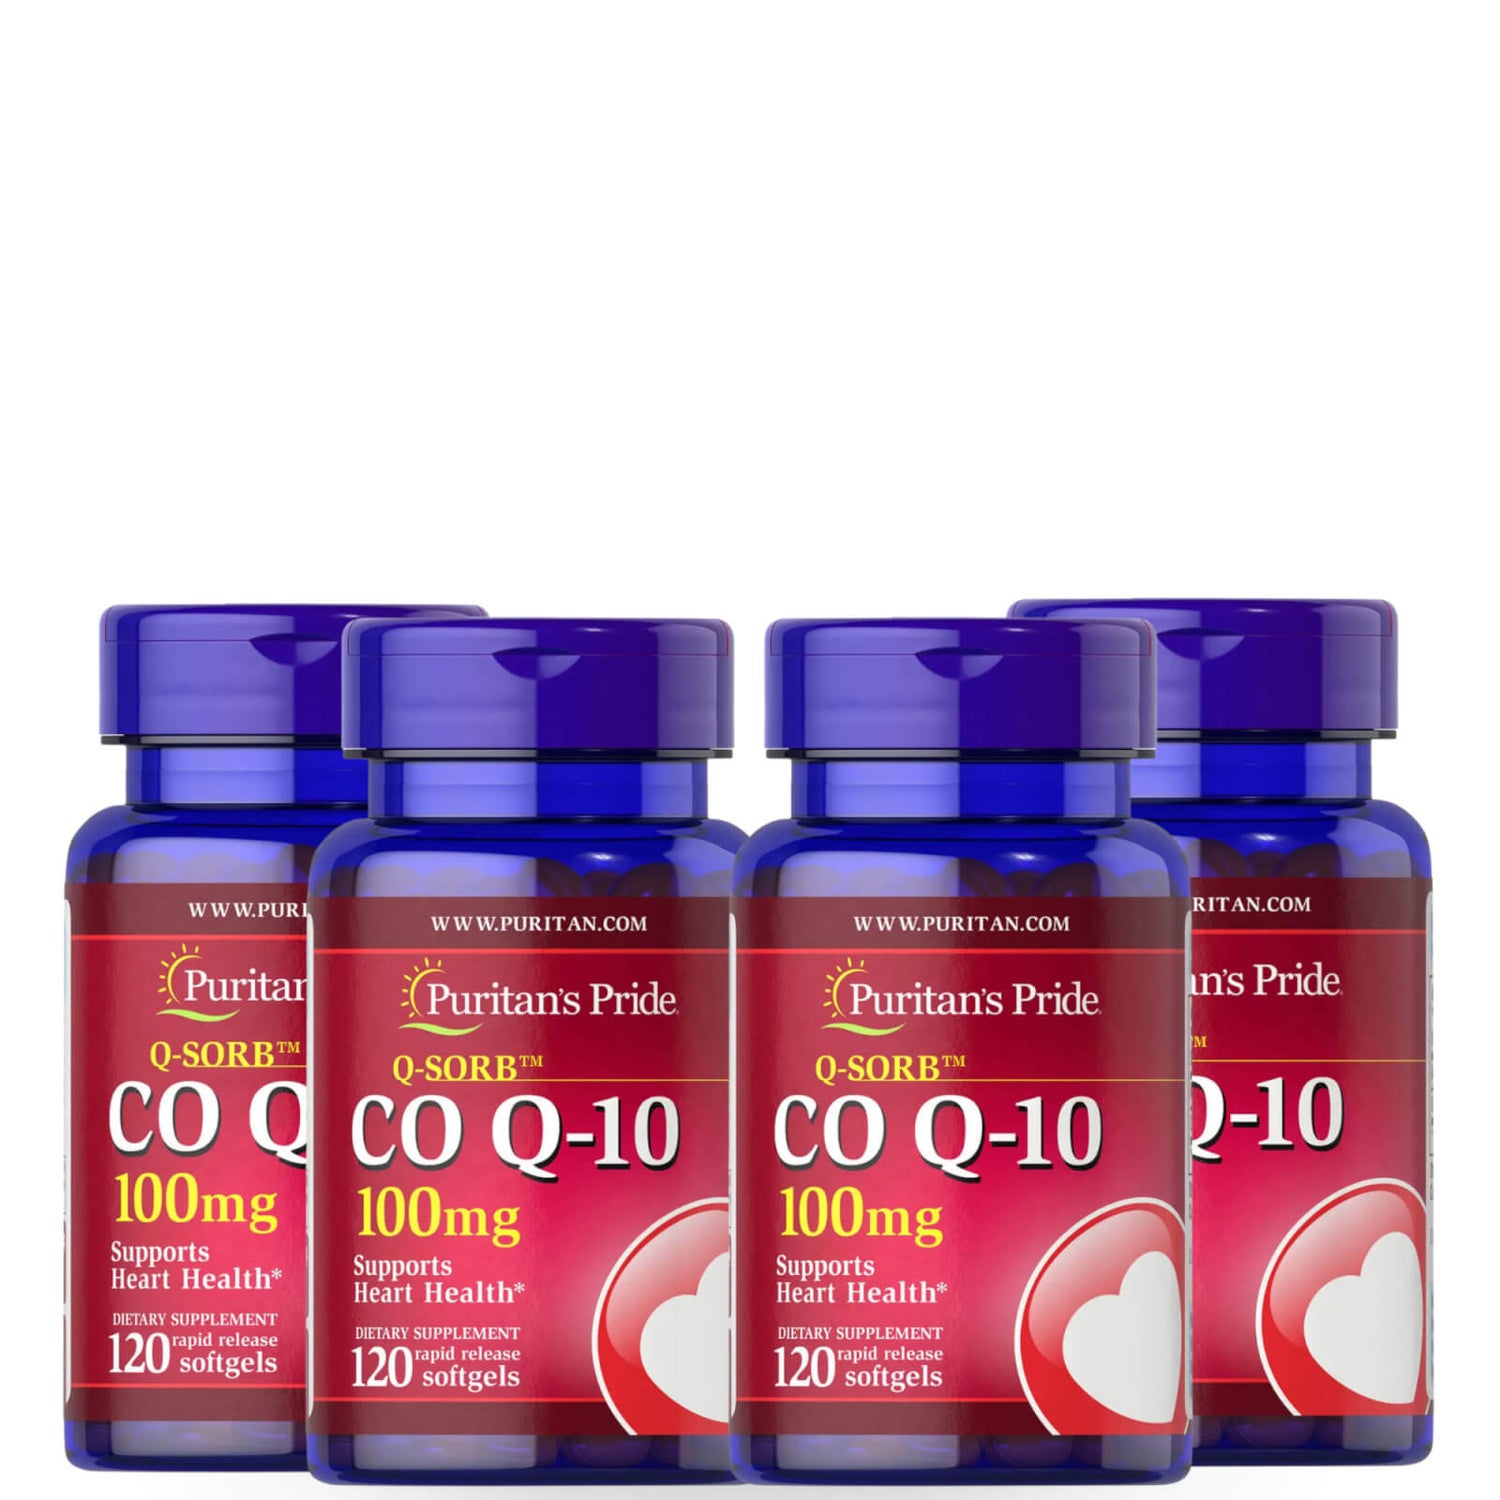 Puritan's Pride CO Q-10 100 mg - 120 softgels (4 Pack)